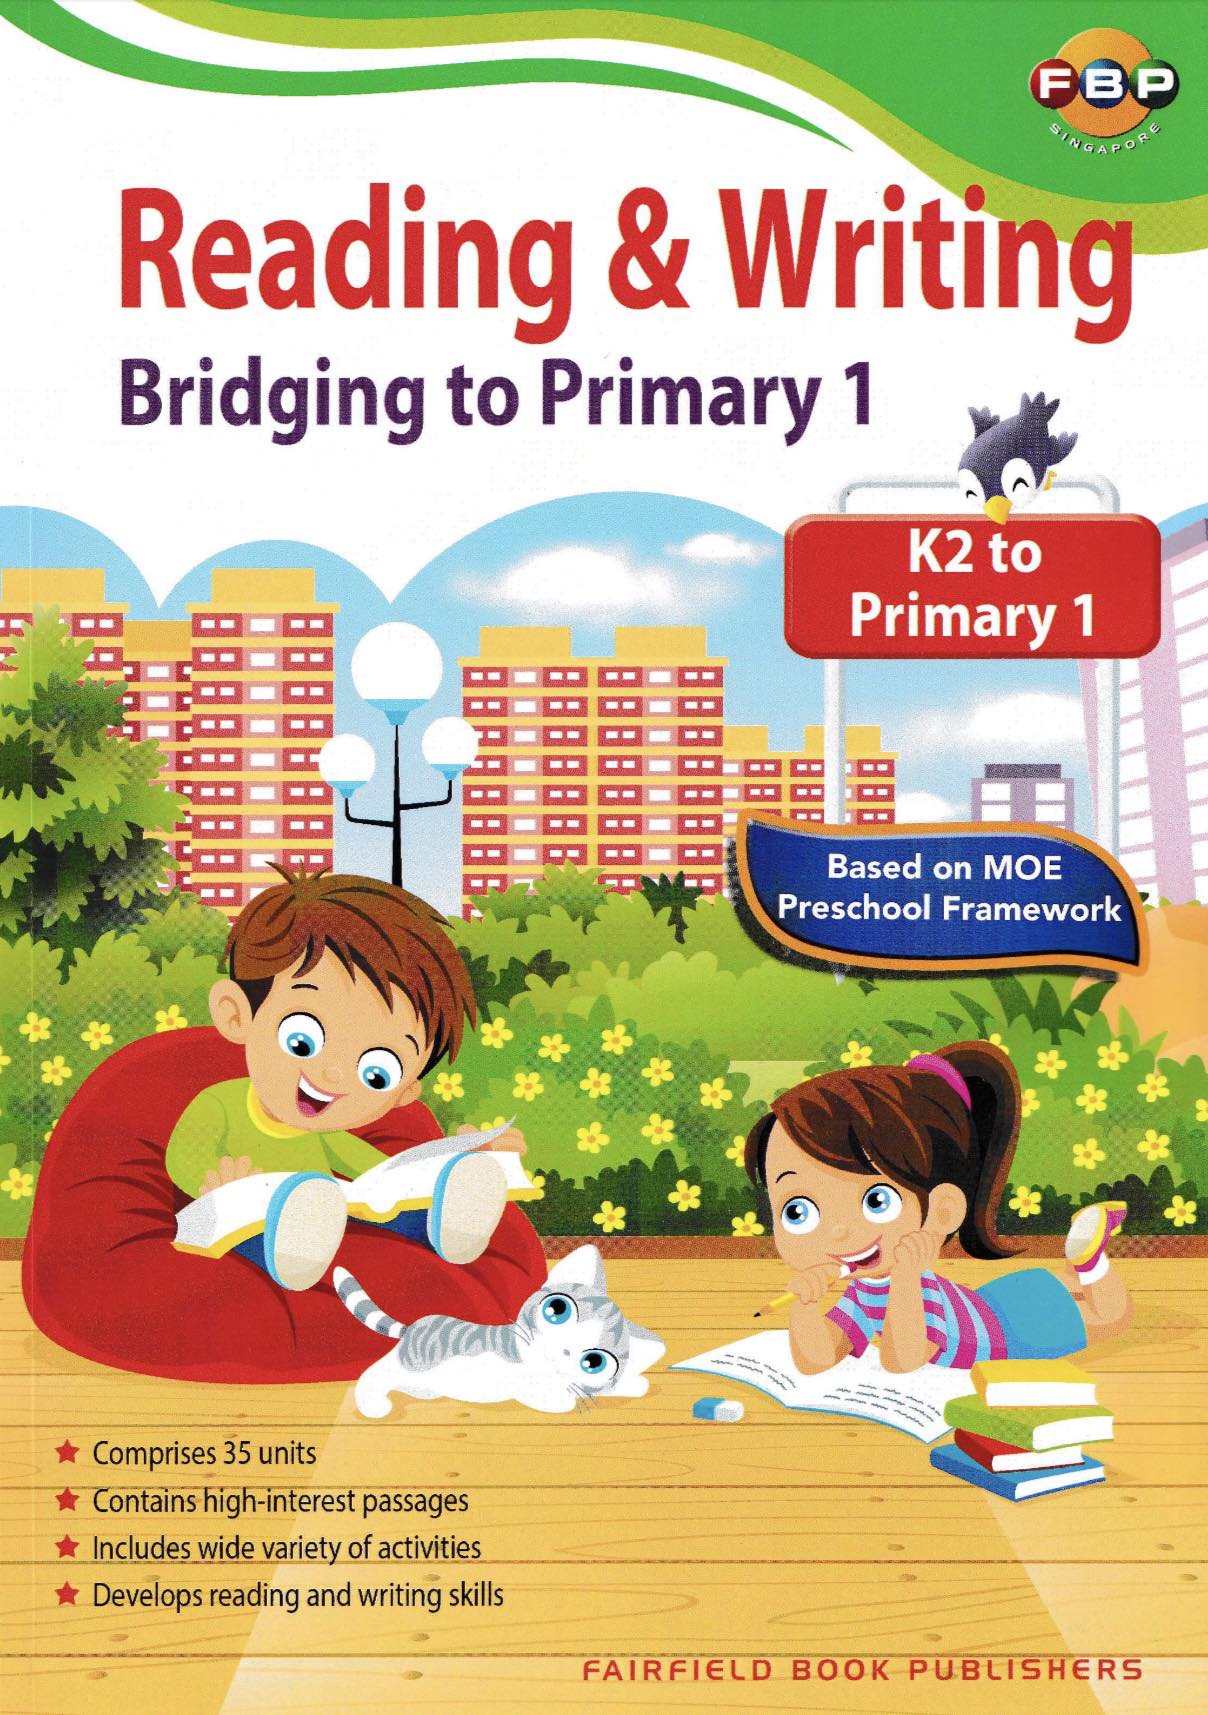 Reading & Writing Bridging to Primary 1